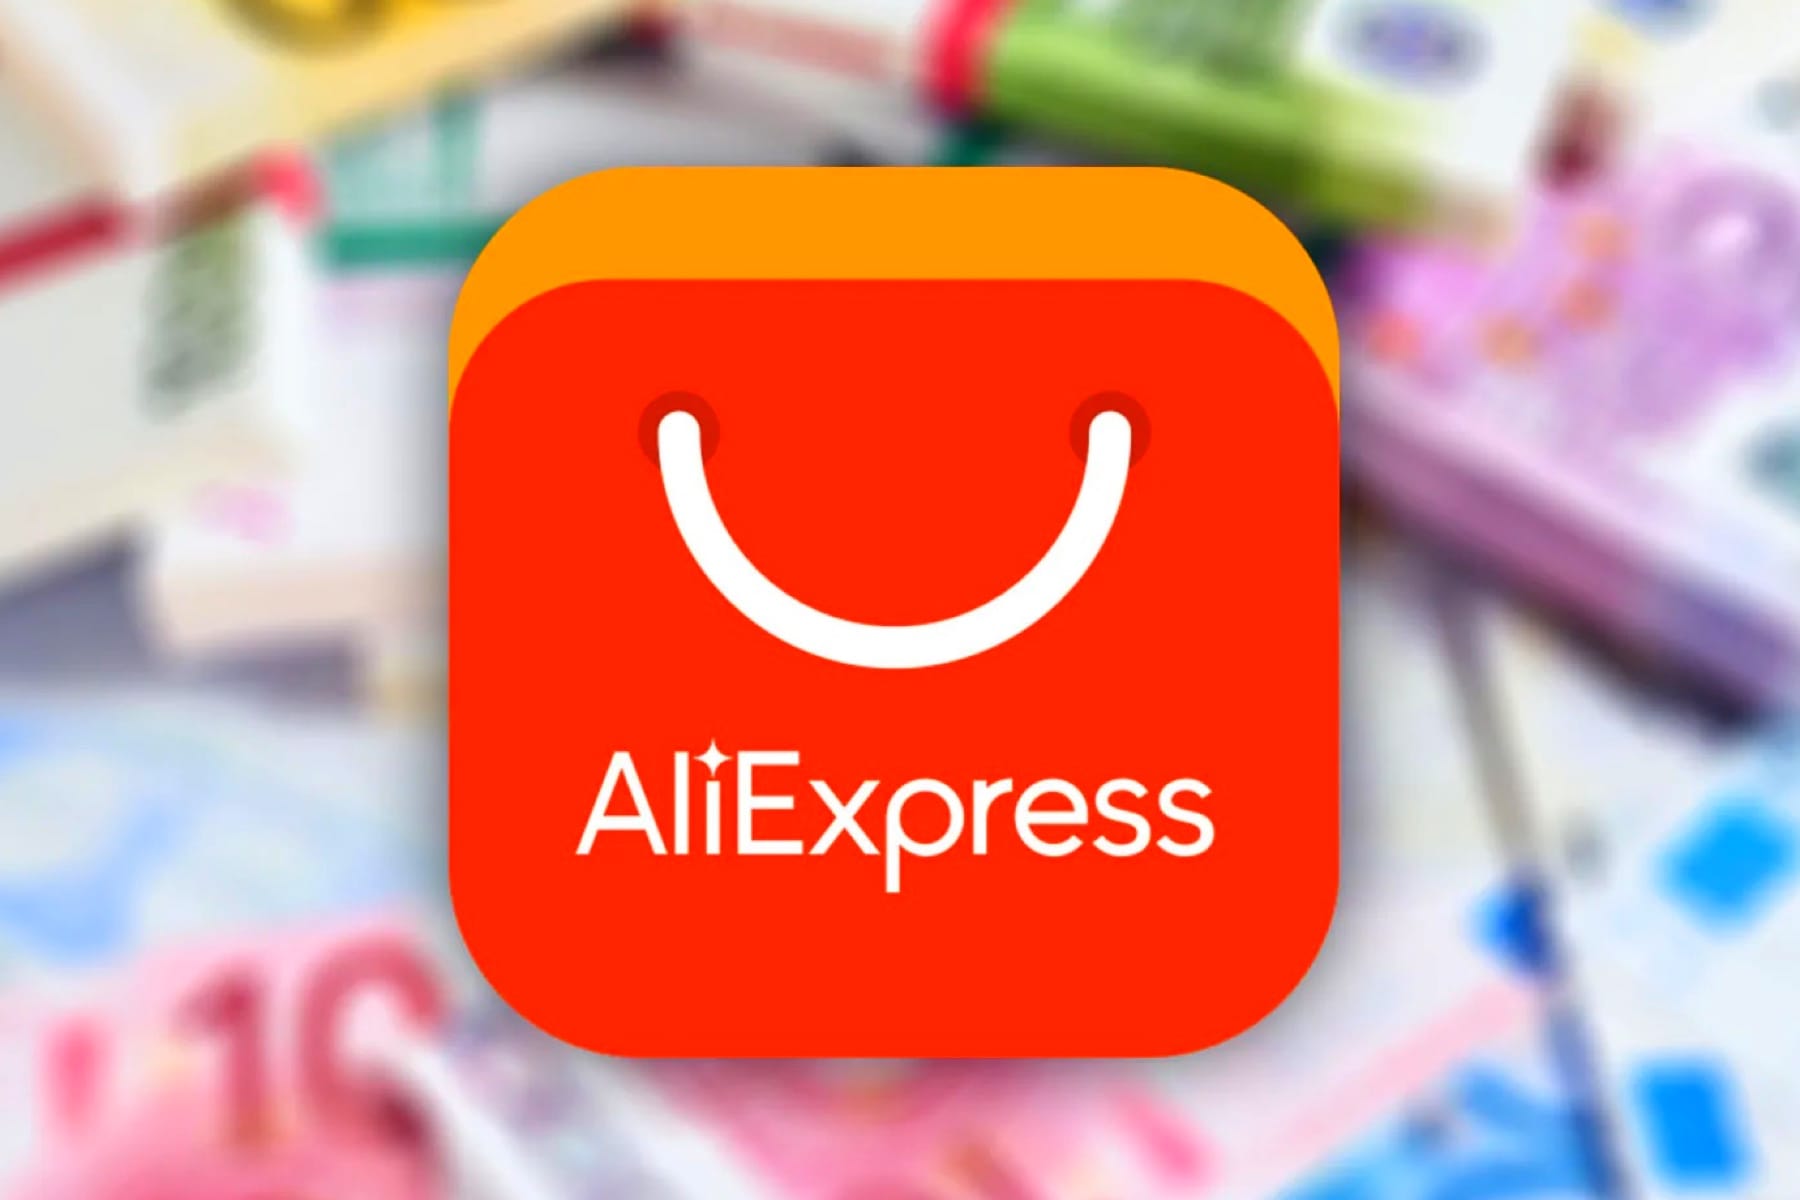 impor barang China melalui AliExpress